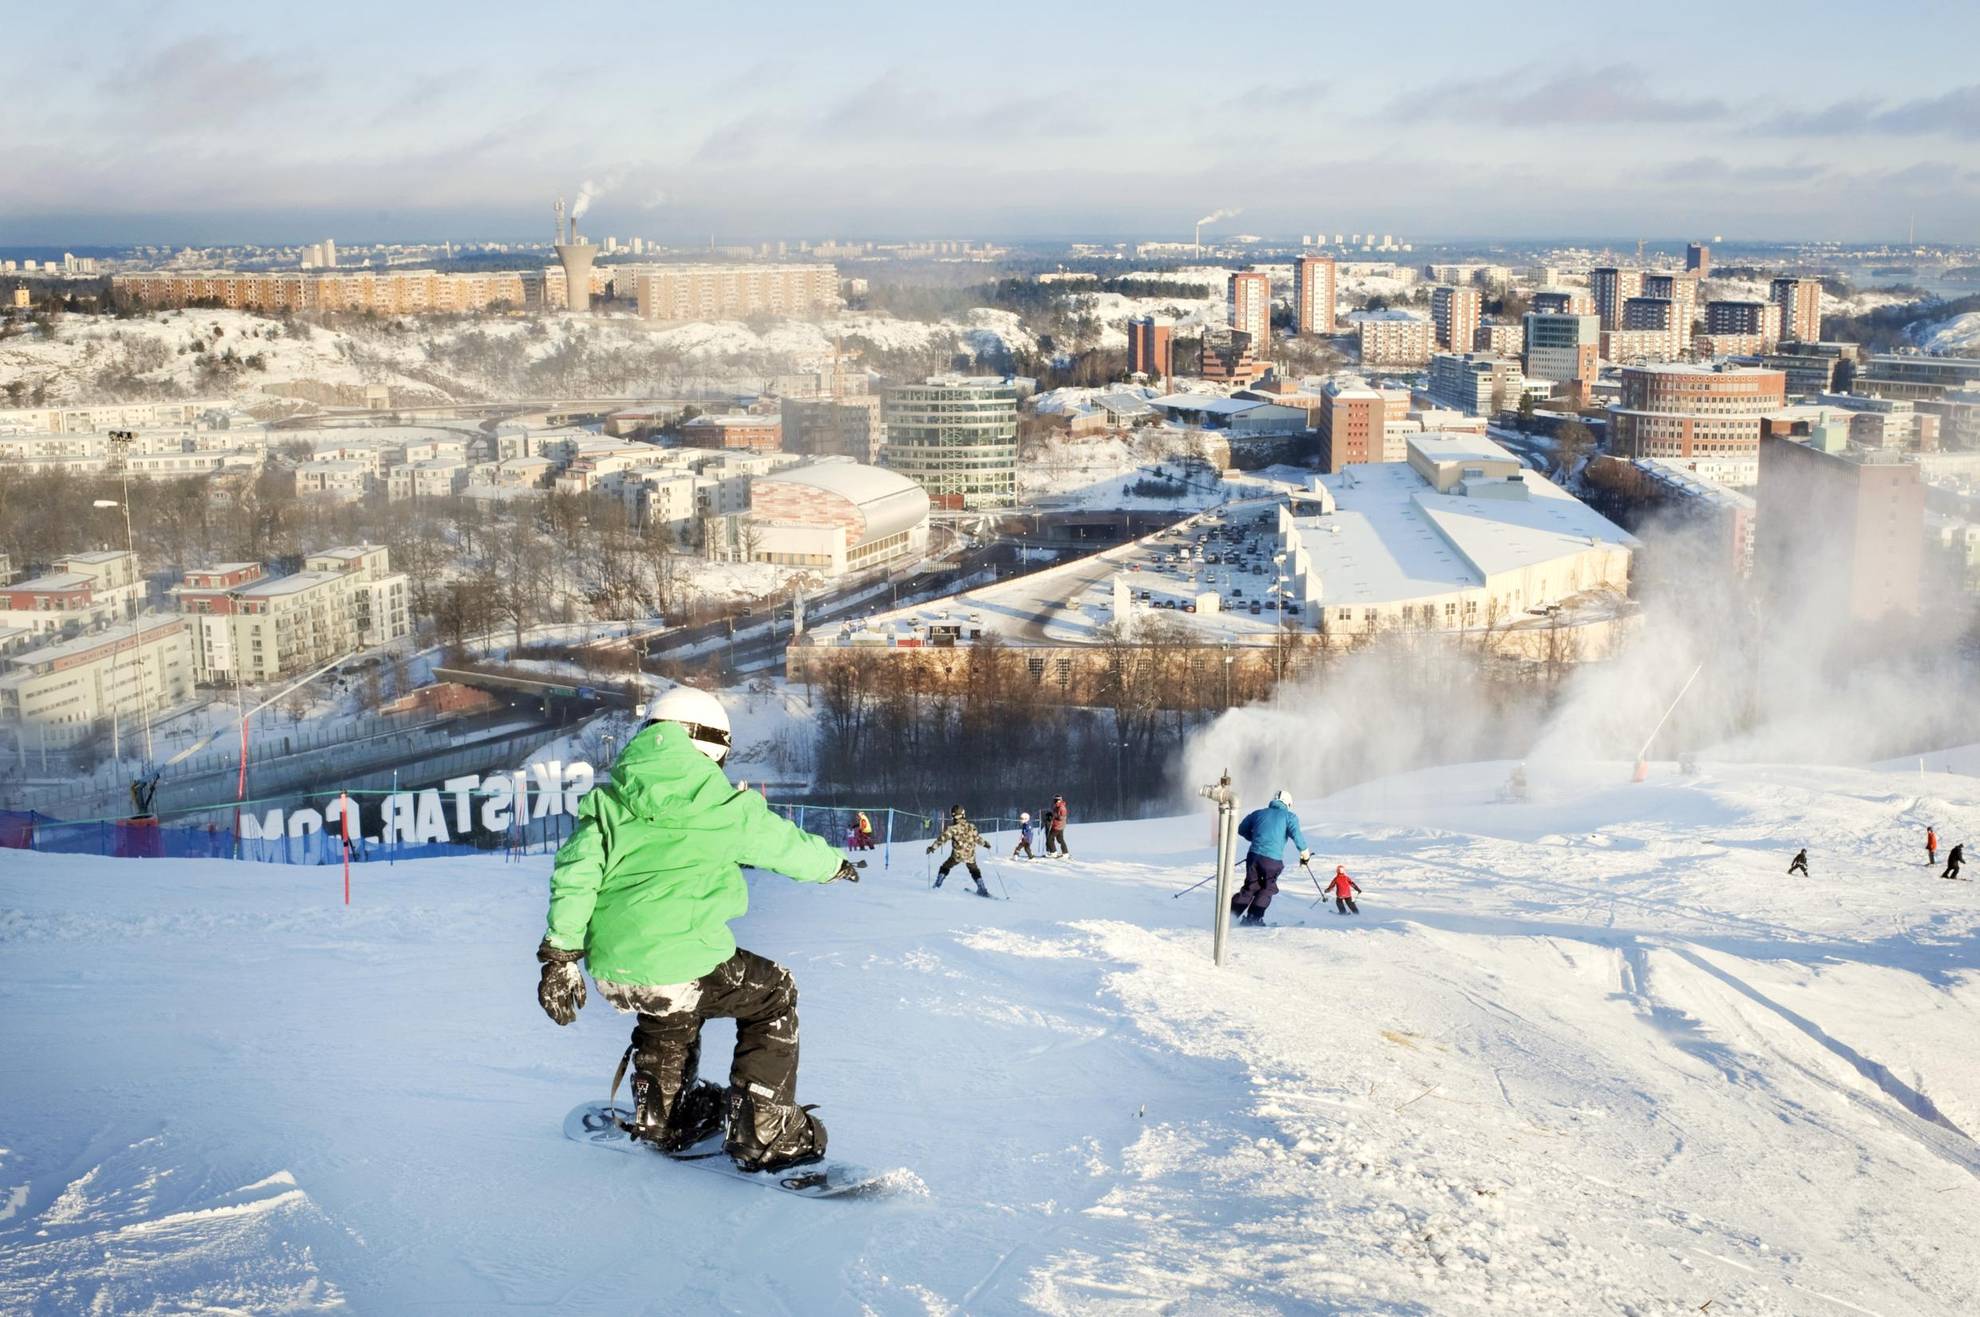 Des personnes en train de descendre des pistes de Hammarbybacken en snowboard en regardant la vue sur Stockholm